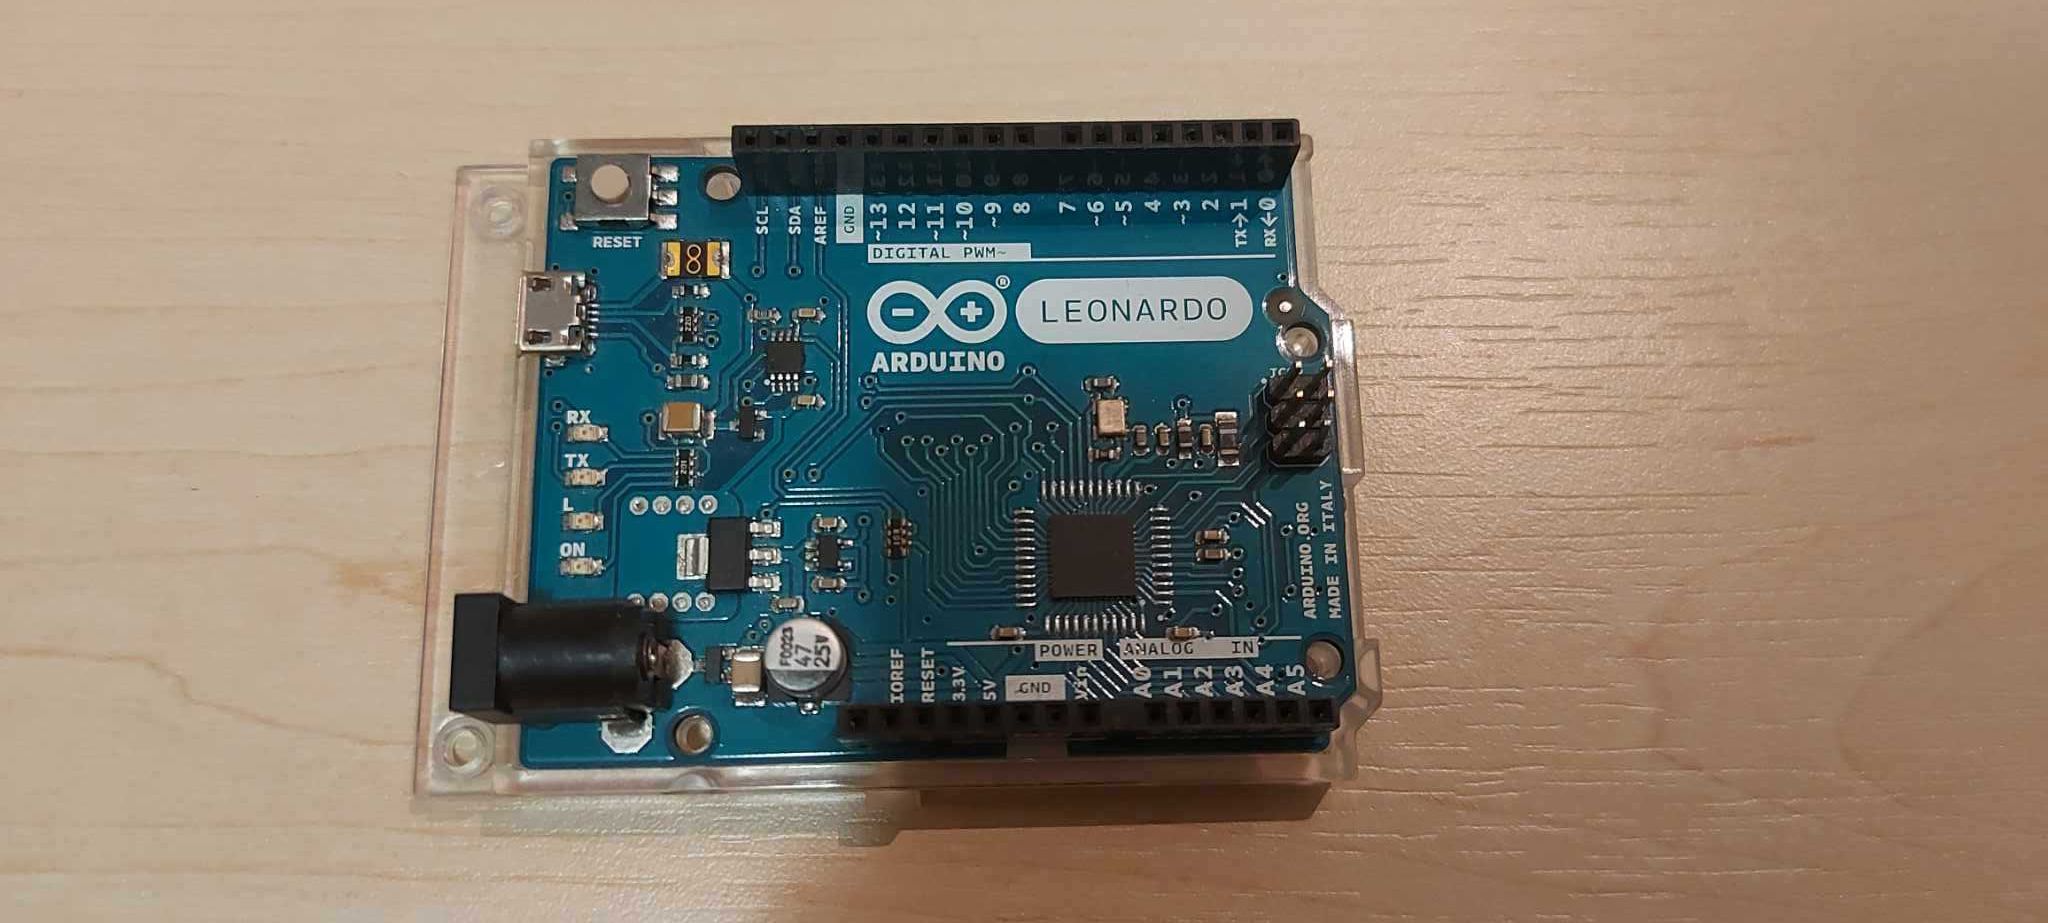 Arduino Leonardo R3 mikrokontroler nowy